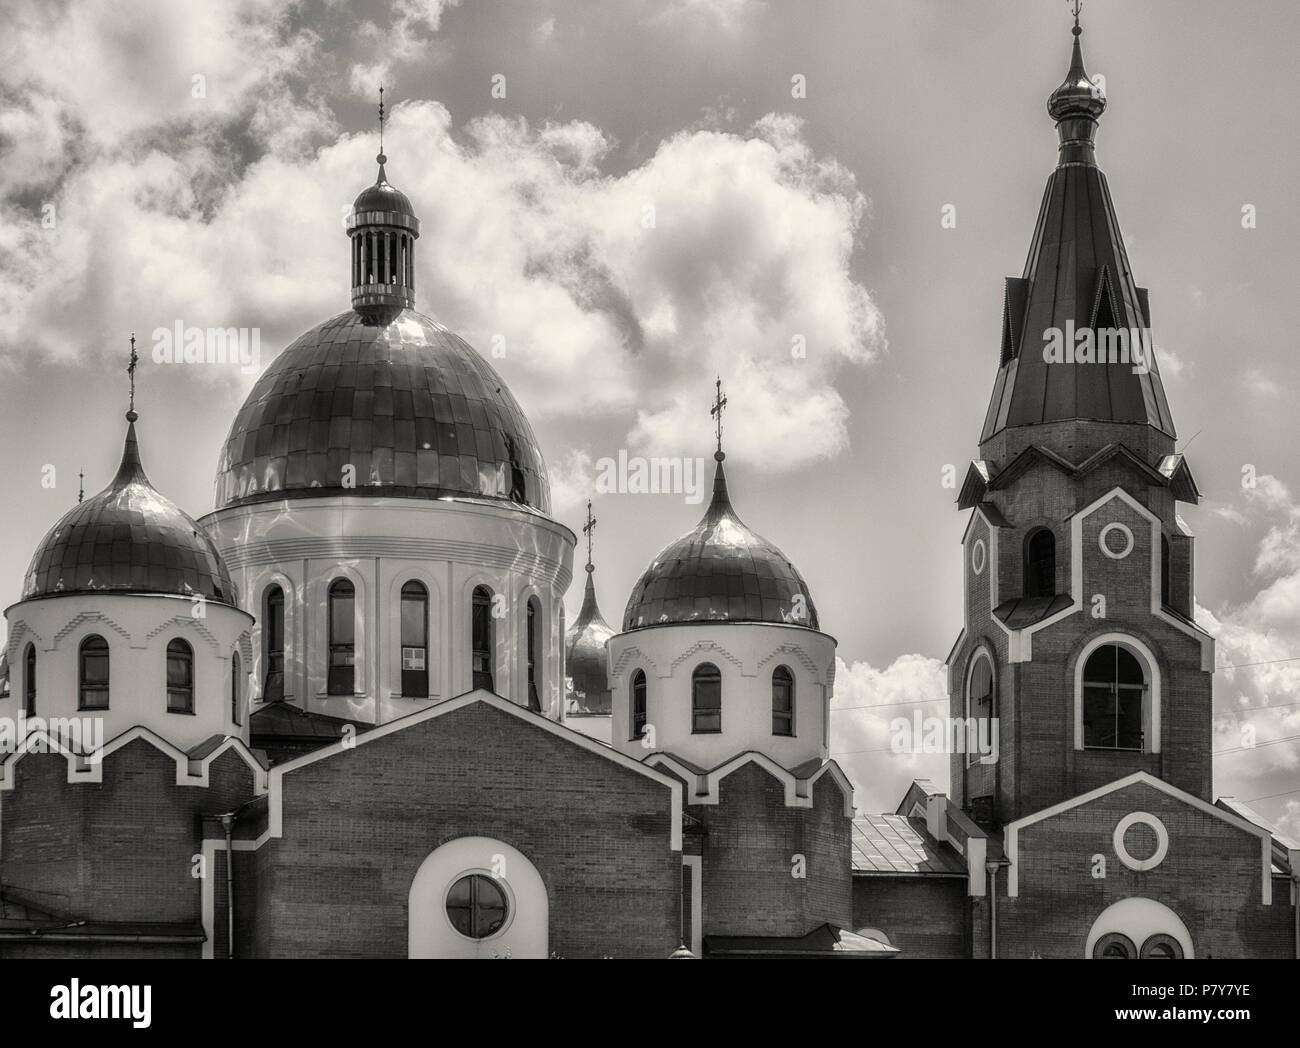 St. Andrew's Cathedral in Ust-Kamenogorsk. Religiöse Architektur. Monochrom. Stockfoto